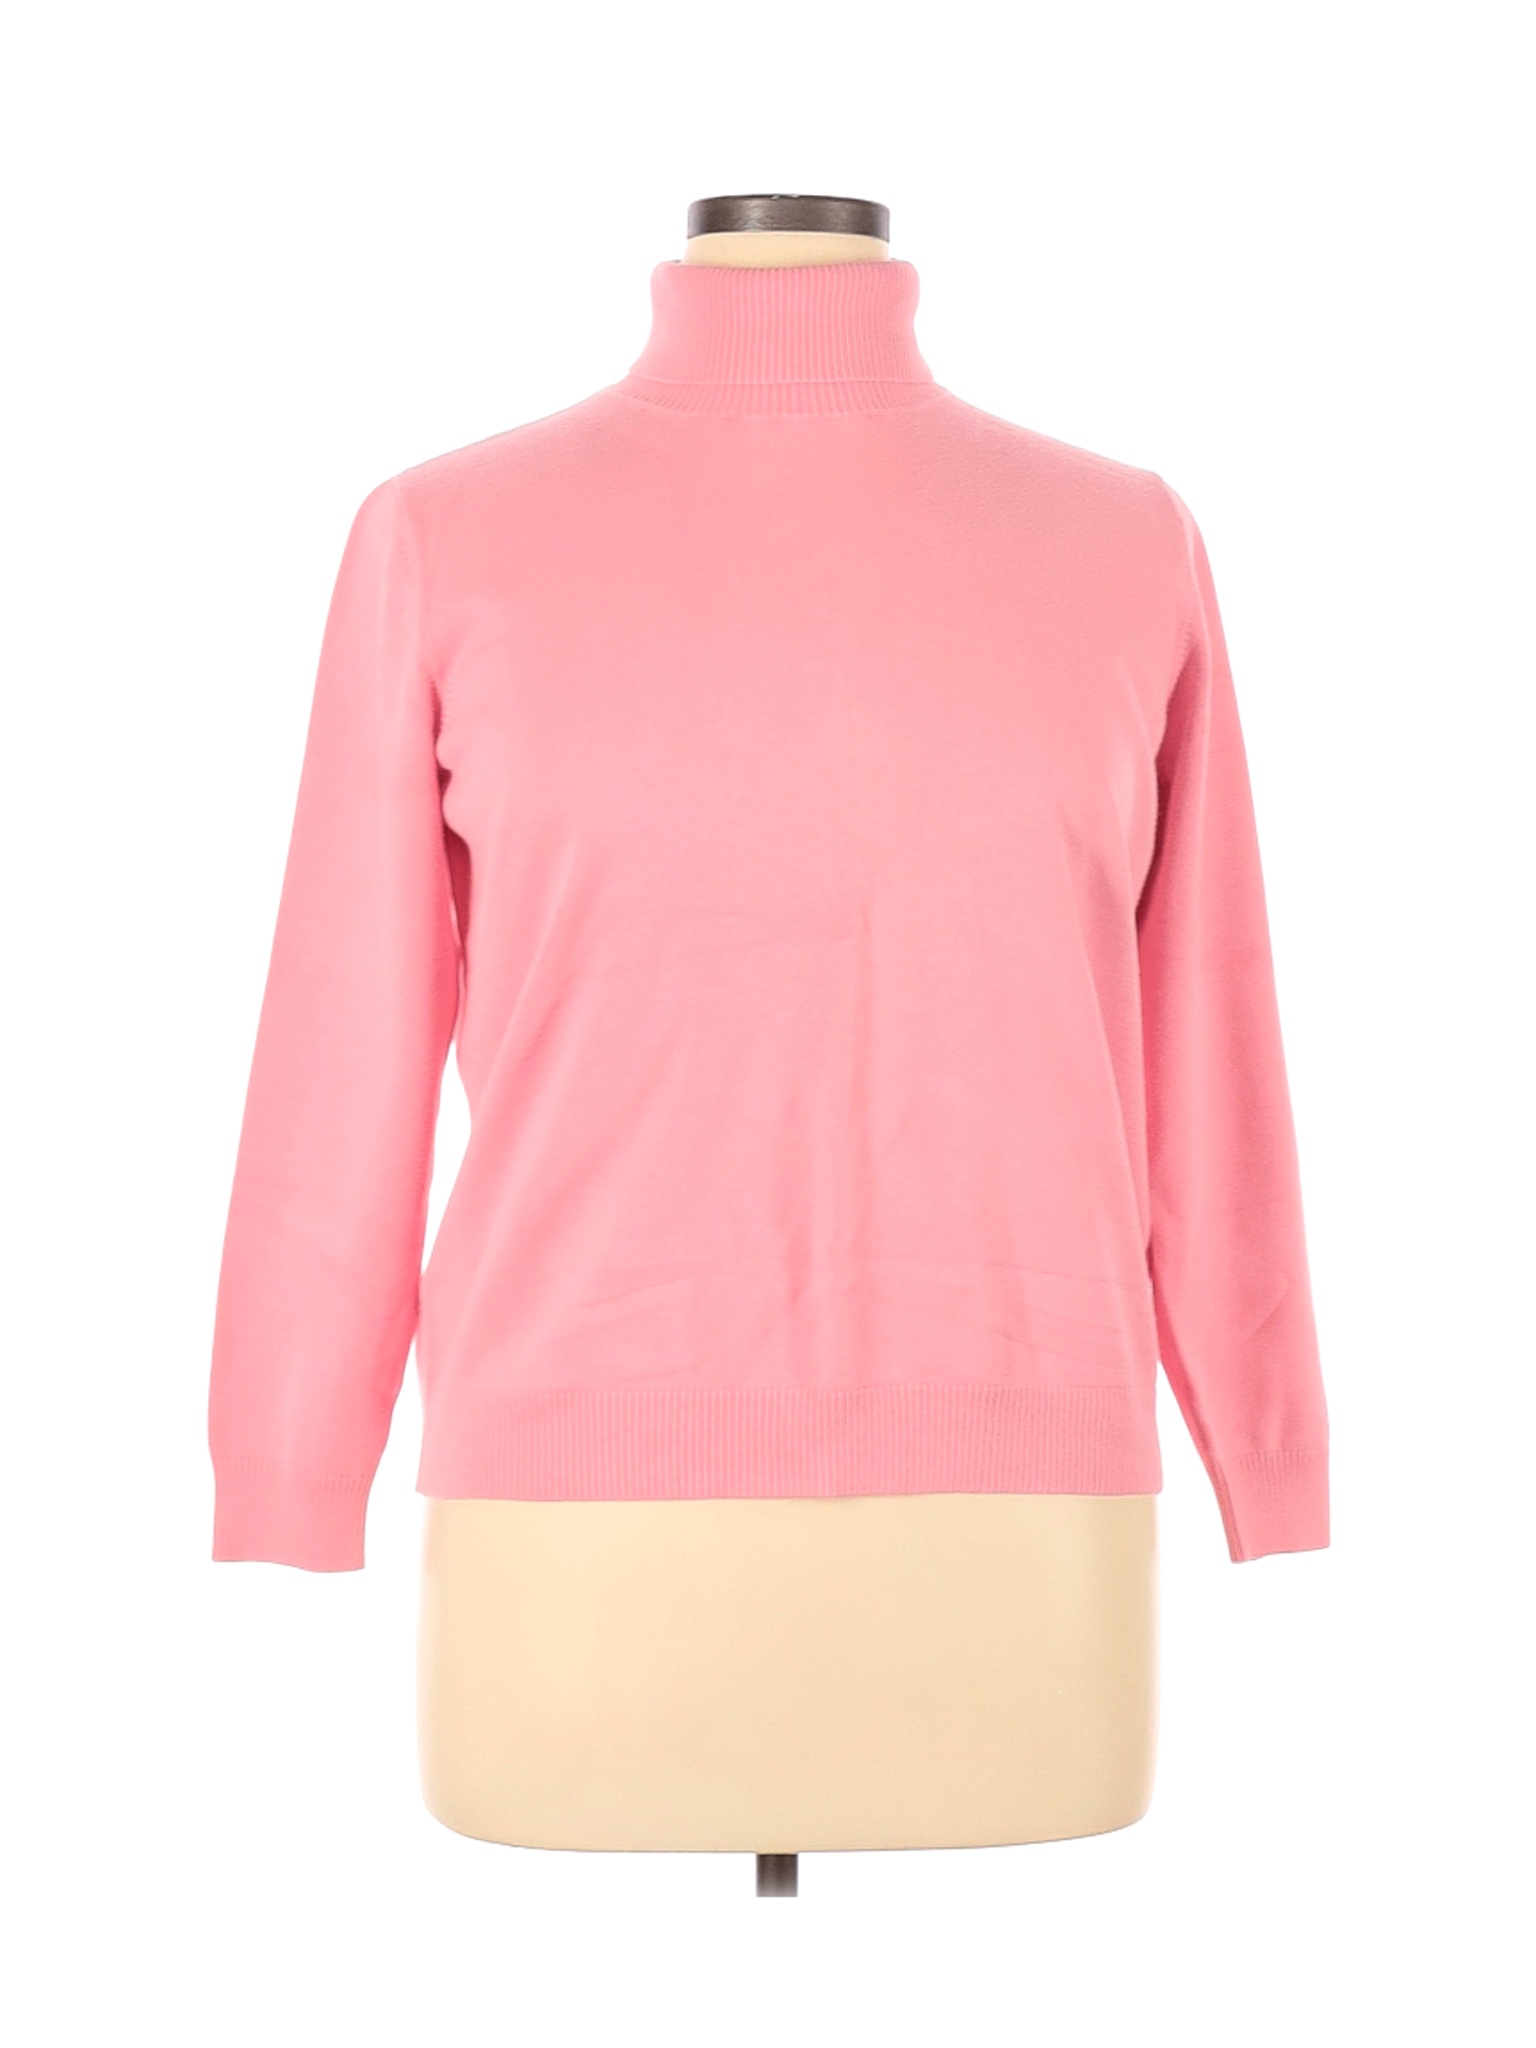 Lands' End Women Pink Turtleneck Sweater XL | eBay